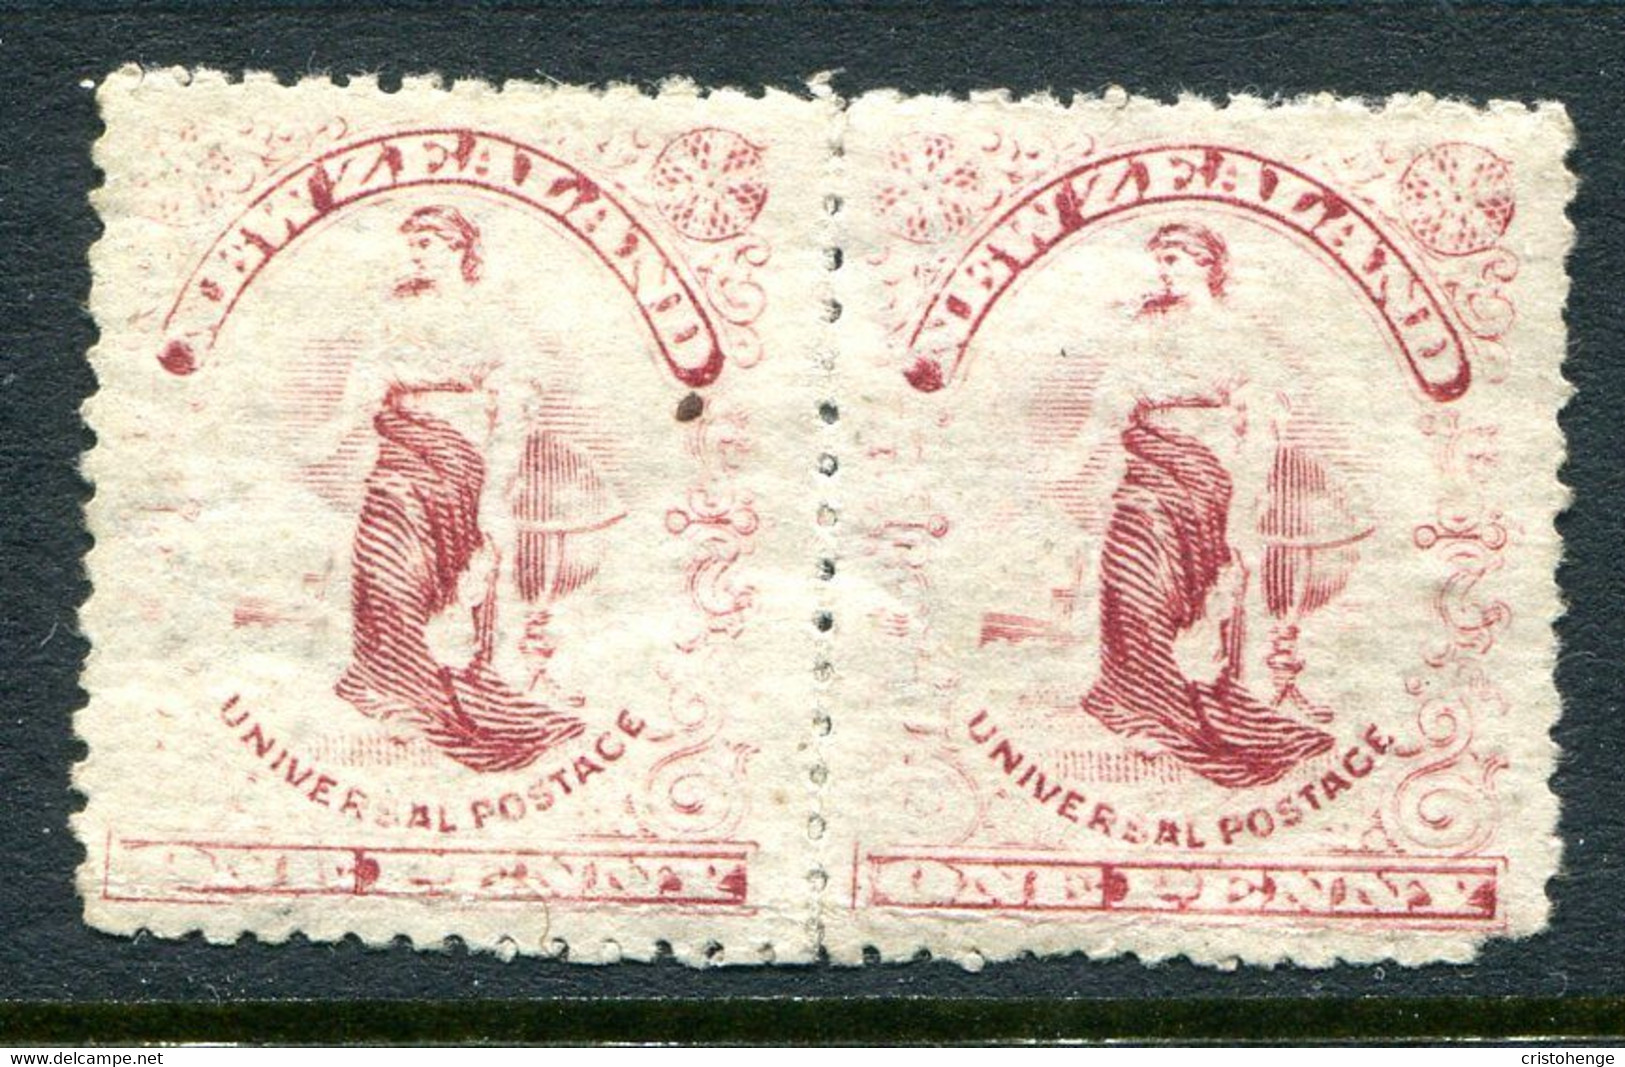 New Zealand 1906 Universal - Royle Plates - Cowan Paper - P.14 - 1d Rose-carmine Pair HM (SG 356) - Unused Stamps